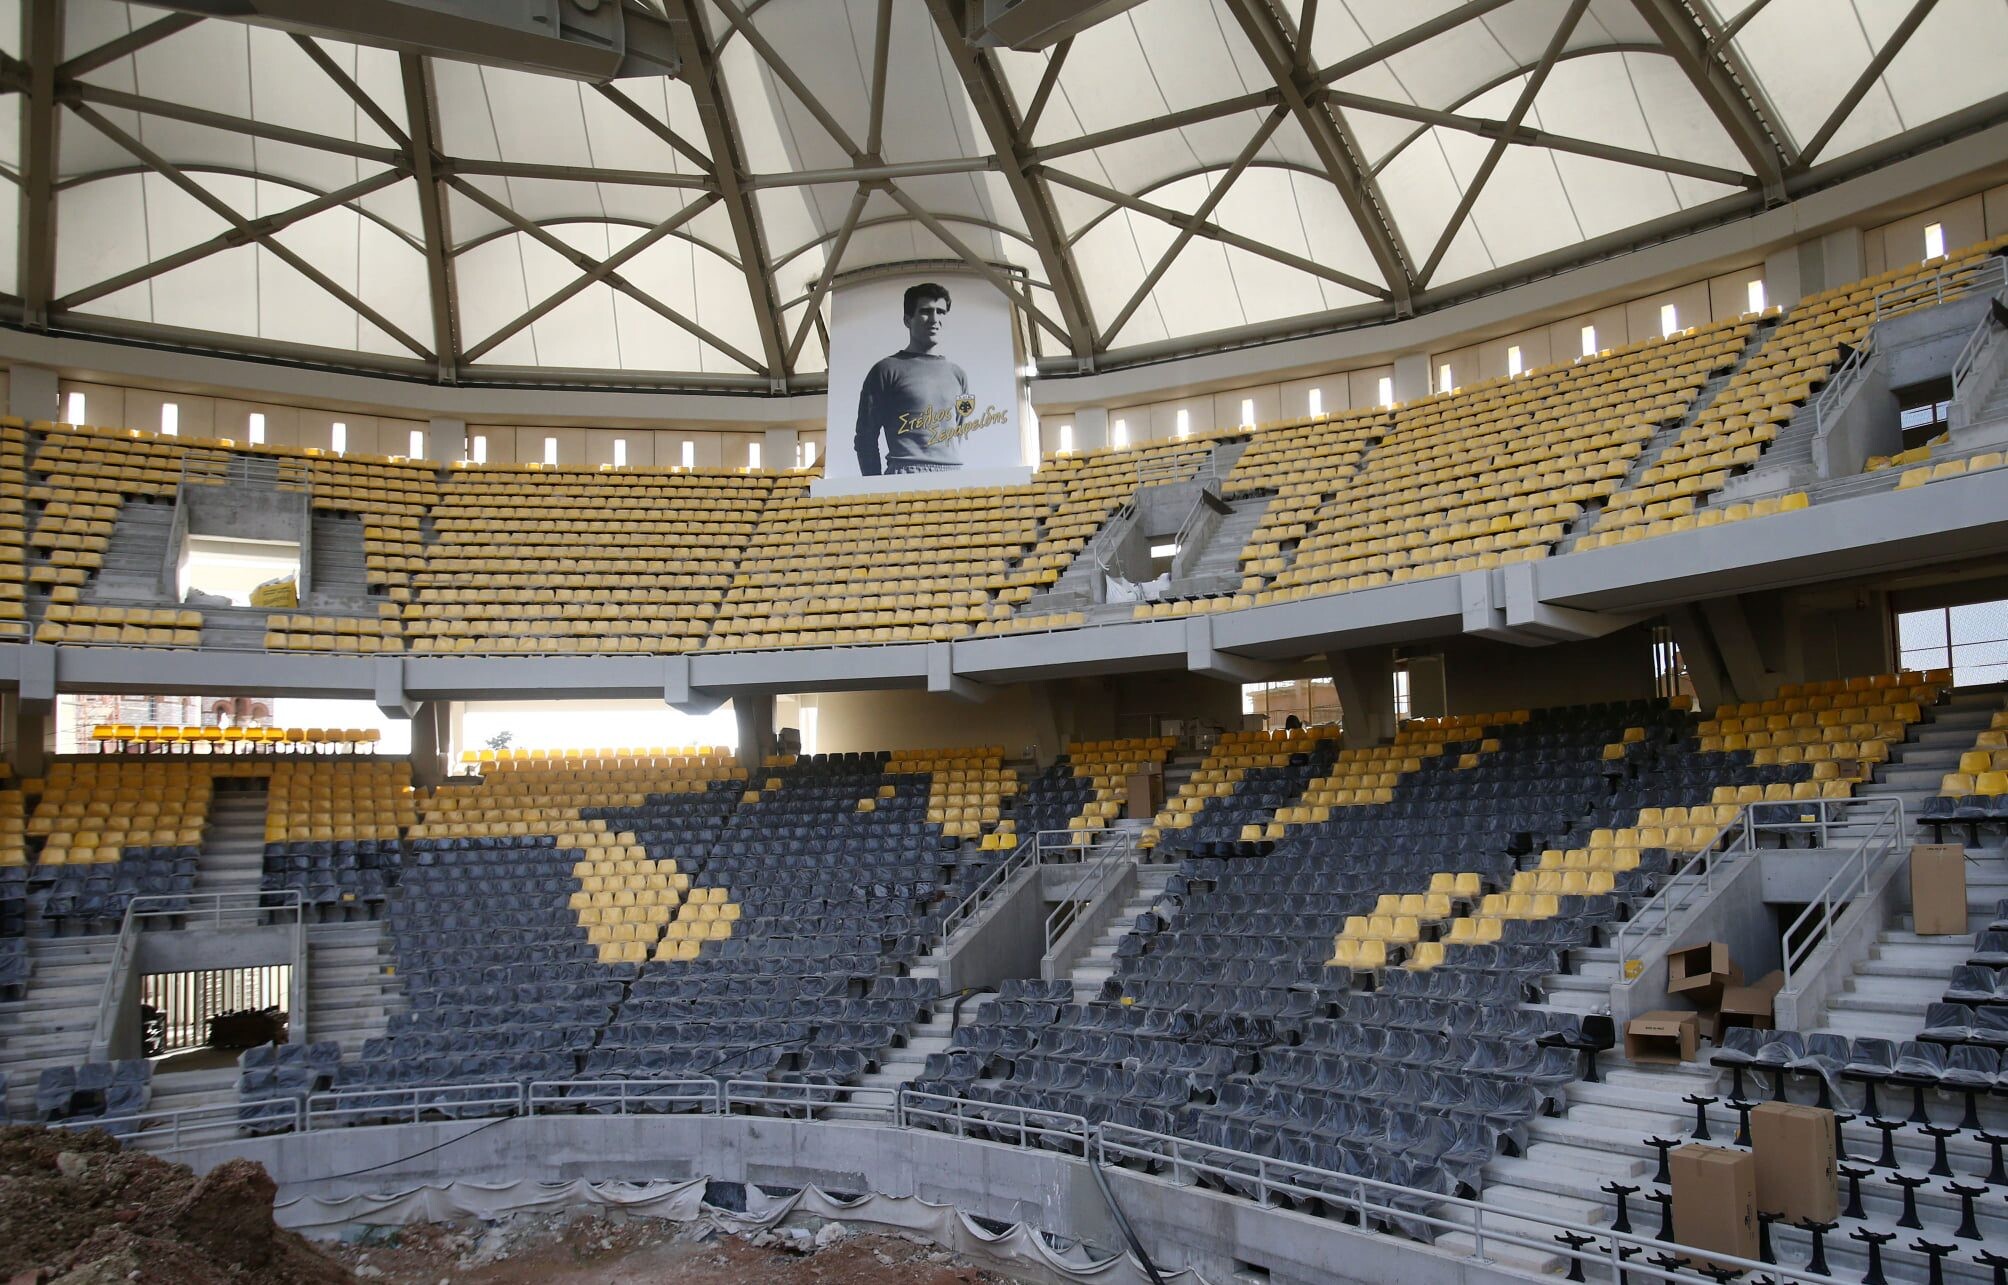 More information about "Οι κατασκευαστικές εξελίξεις στο νέο γήπεδο της ΑΕΚ "Αγία Σοφία" OPAP Arena"